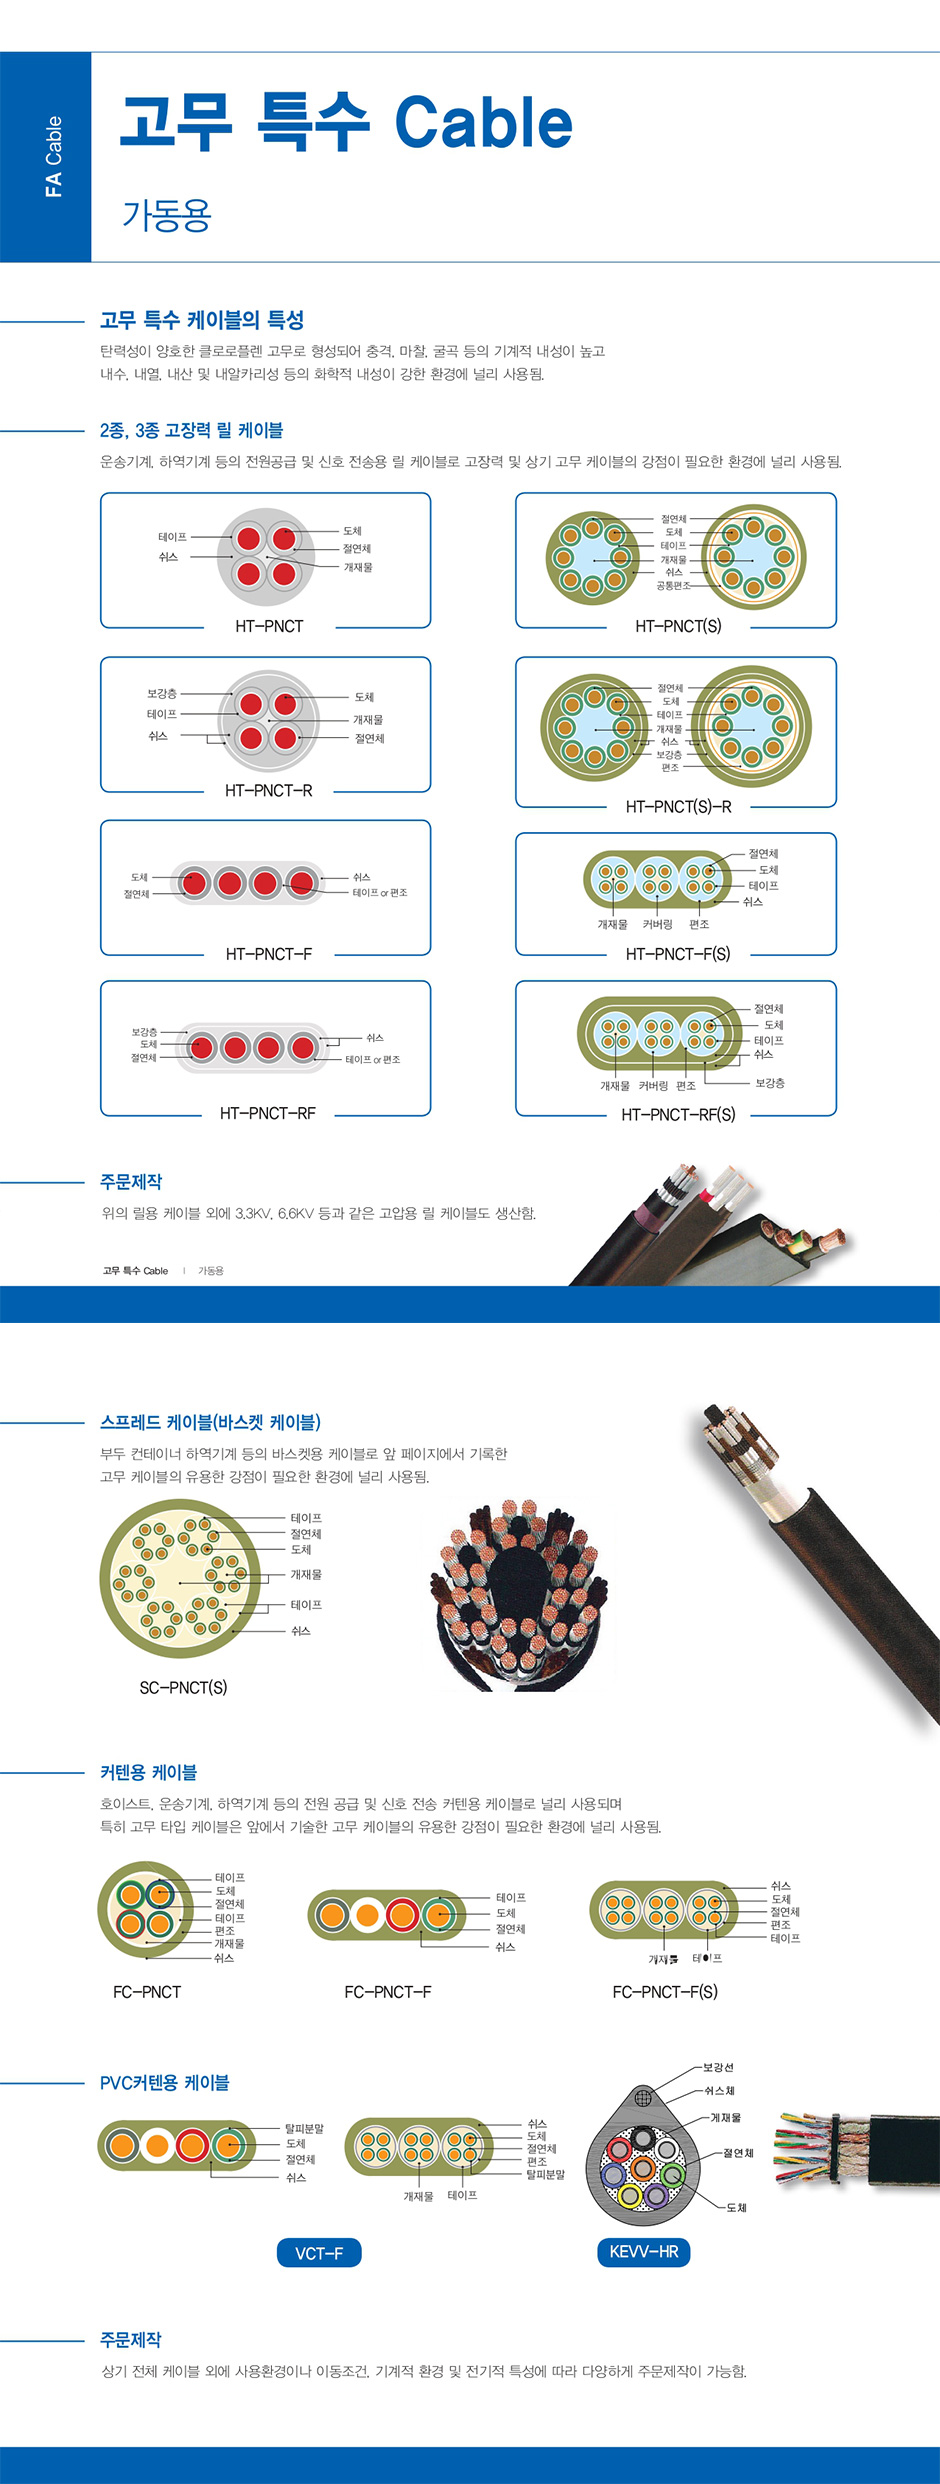 FA Cable : 고무특수 Cable(가동용 고무, PVC)